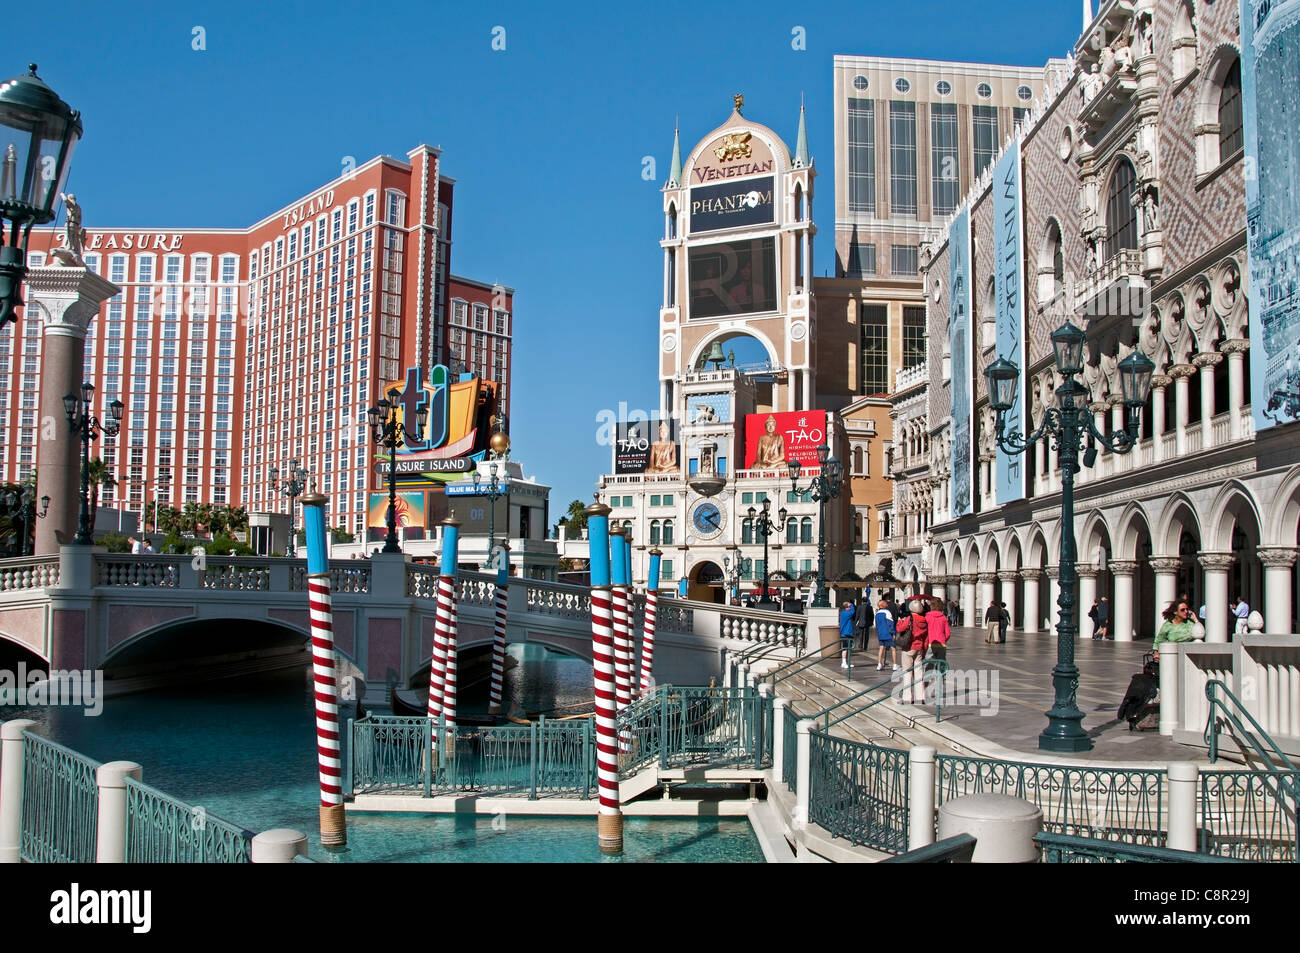 Venetian Venice Las Vegas gambling capital of the World United States Nevada Stock Photo